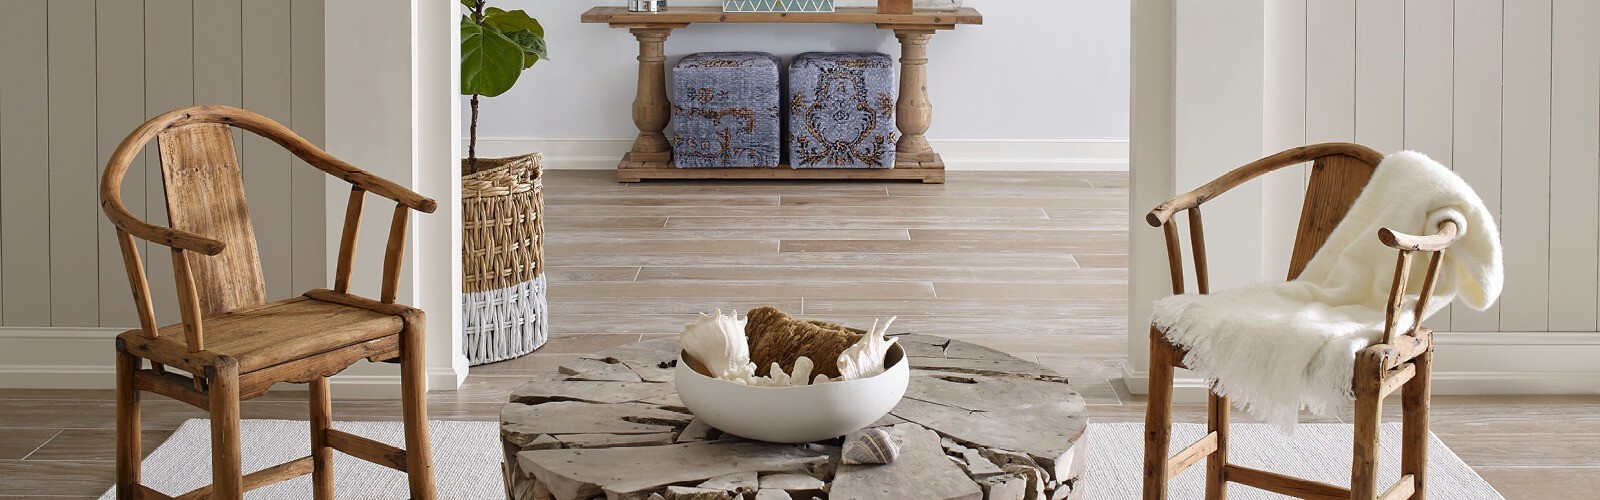 Landmark hickory flooring | Carpeteria